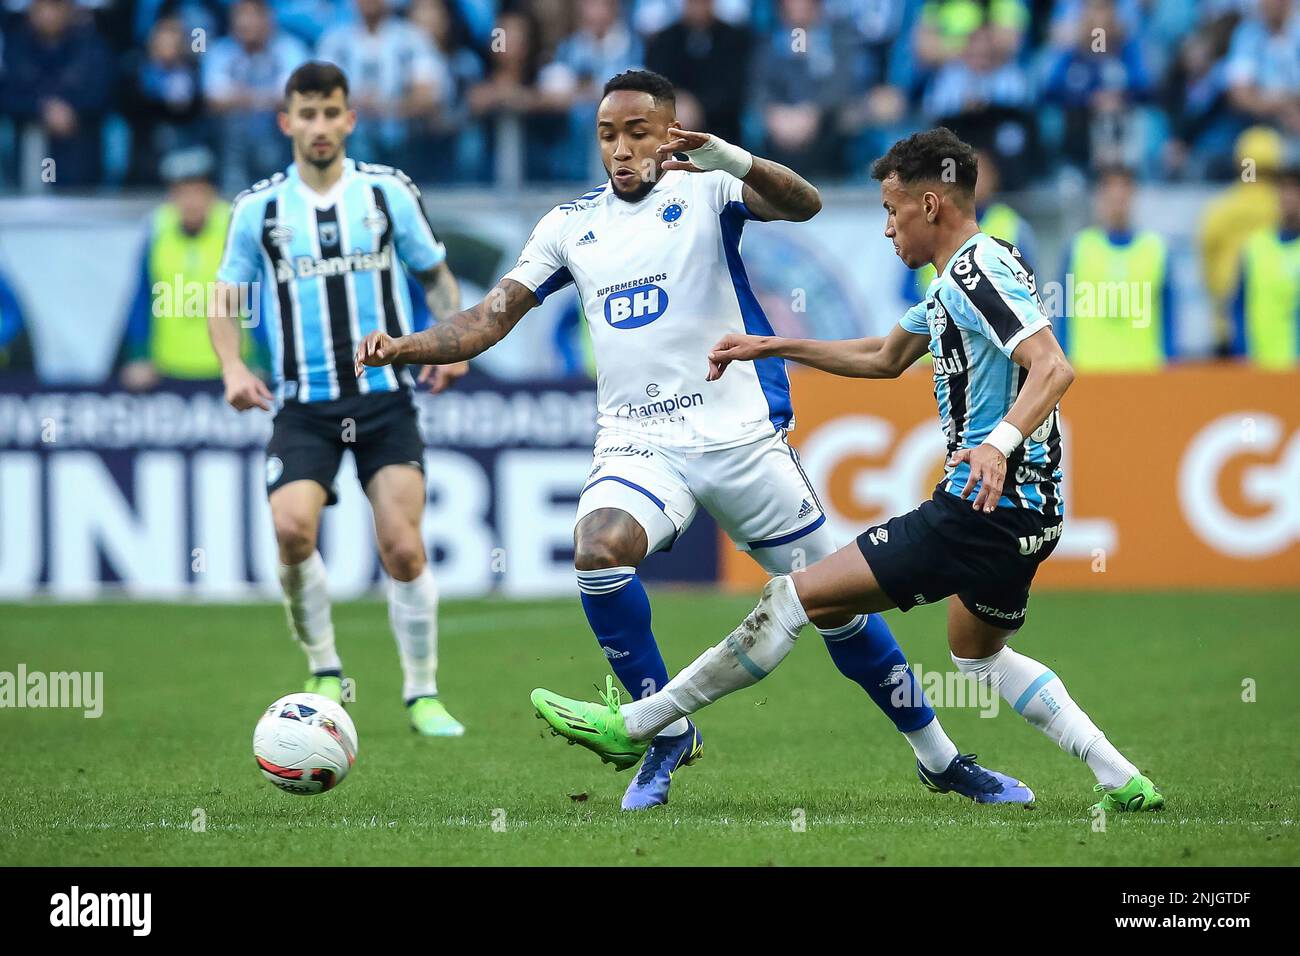 América MG vs. Cruzeiro: A Rivalry That Goes Beyond Football